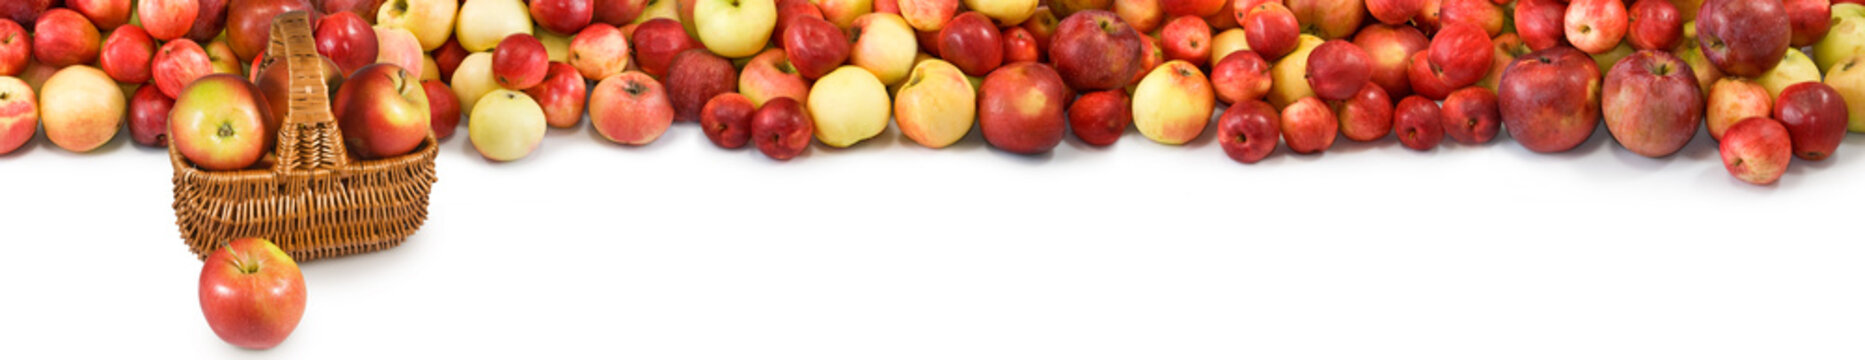 image of ripe apples